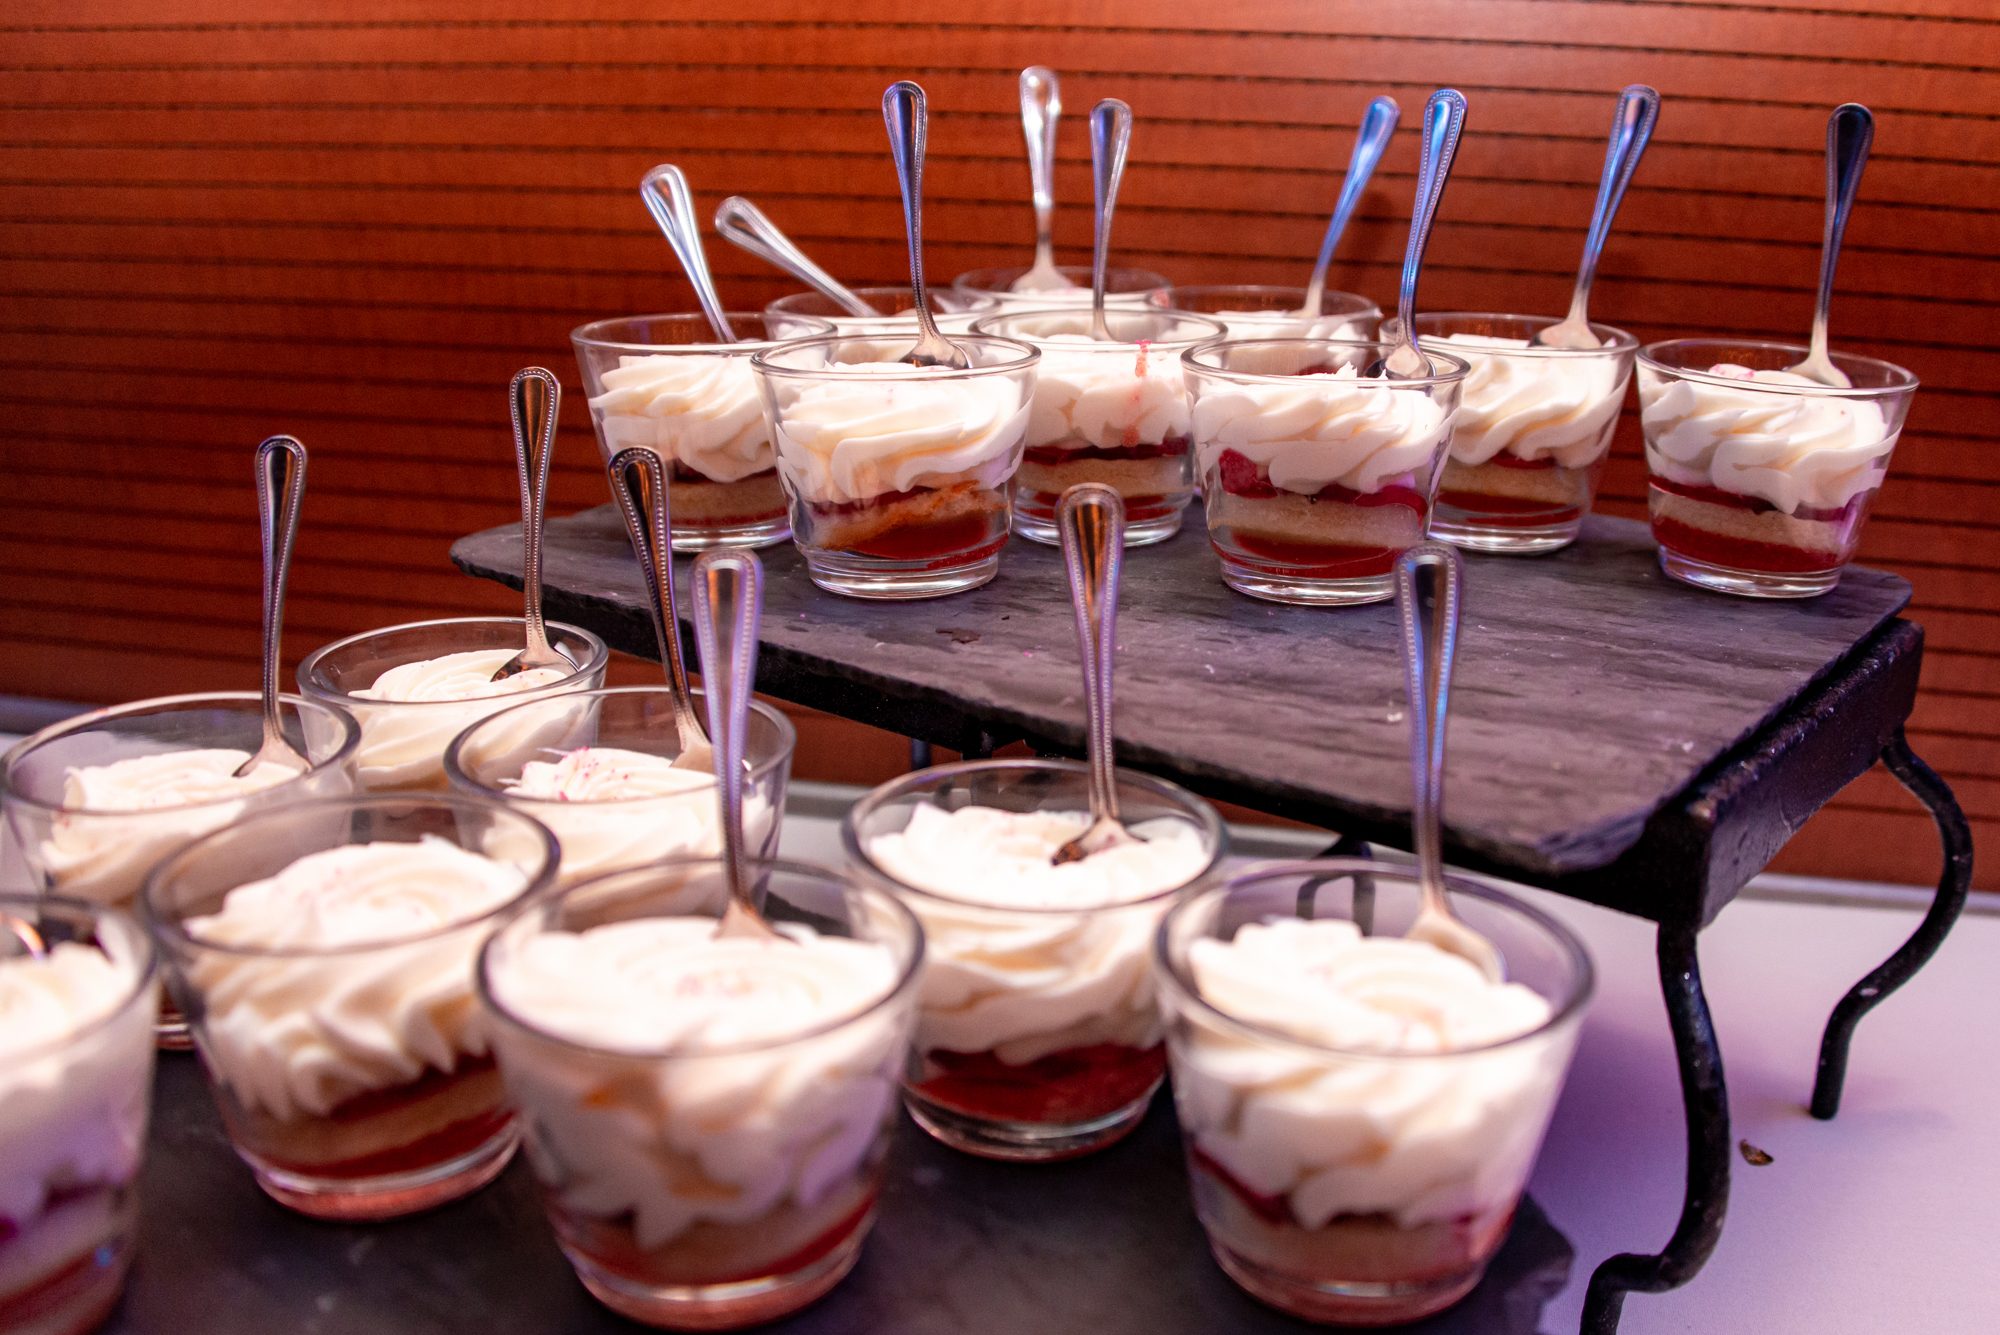 desserts at a kimmel center wedding reception